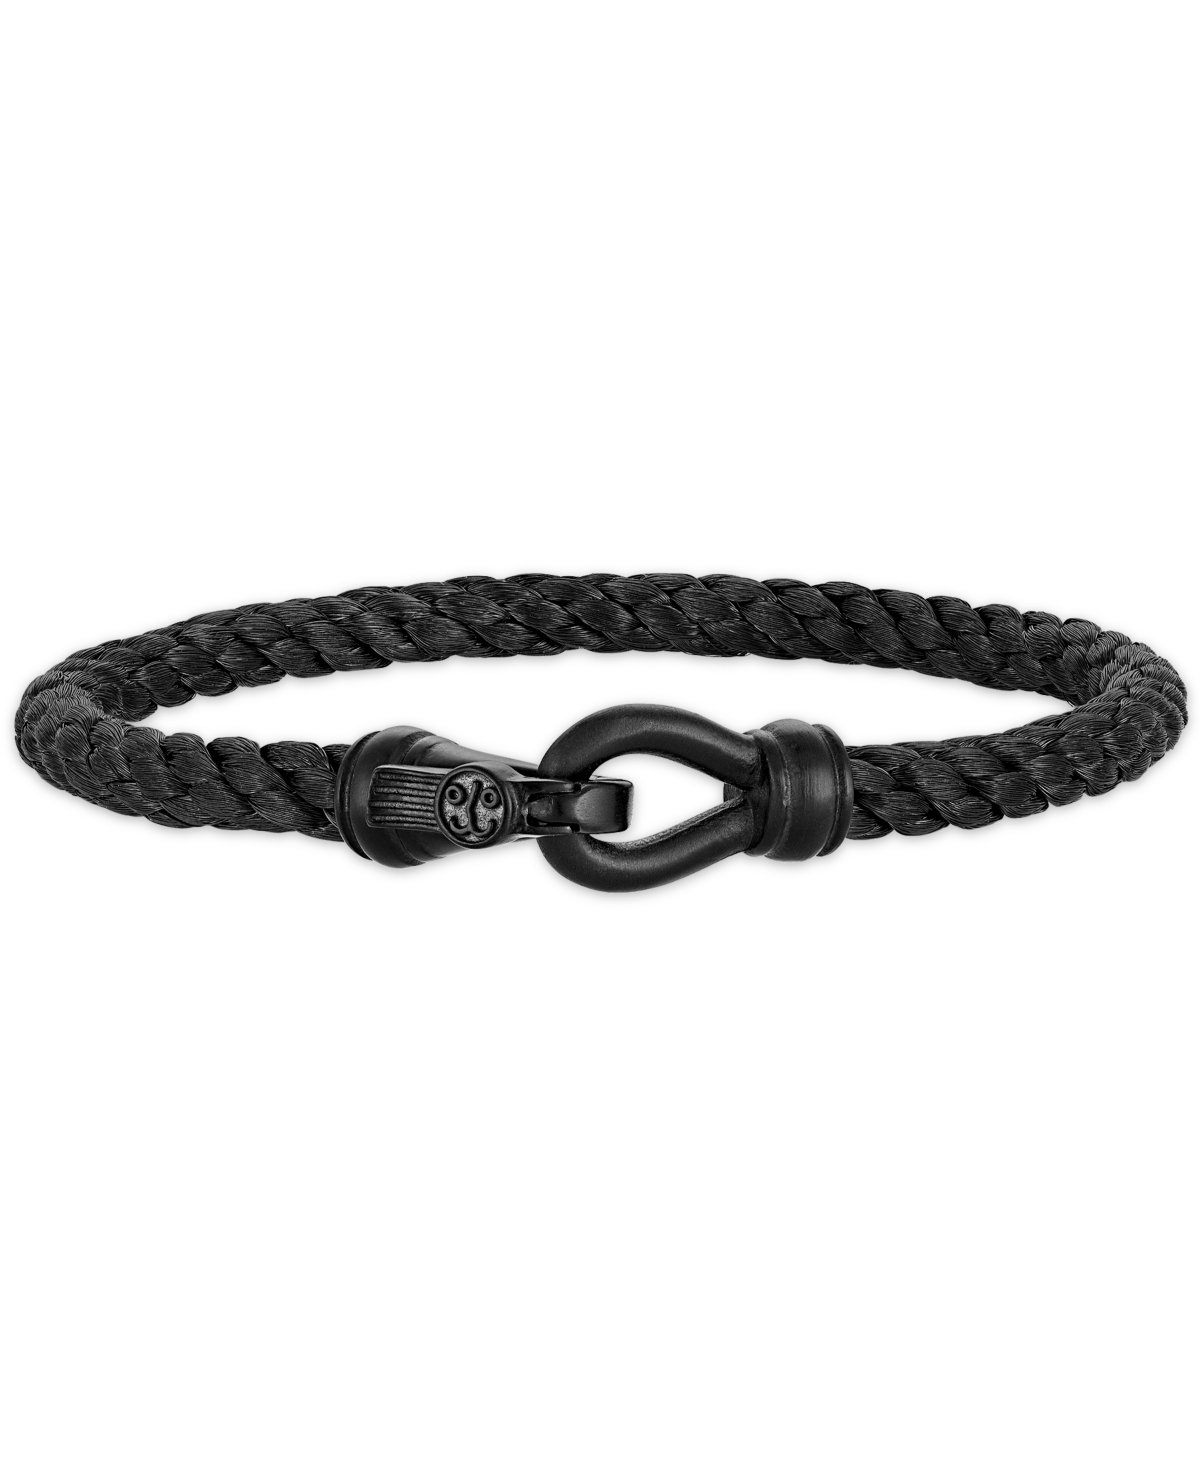 Esquire Men's Jewelry Woven Black Nylon Bracelet In Black Ip Stainless Steel, Created For Macy's